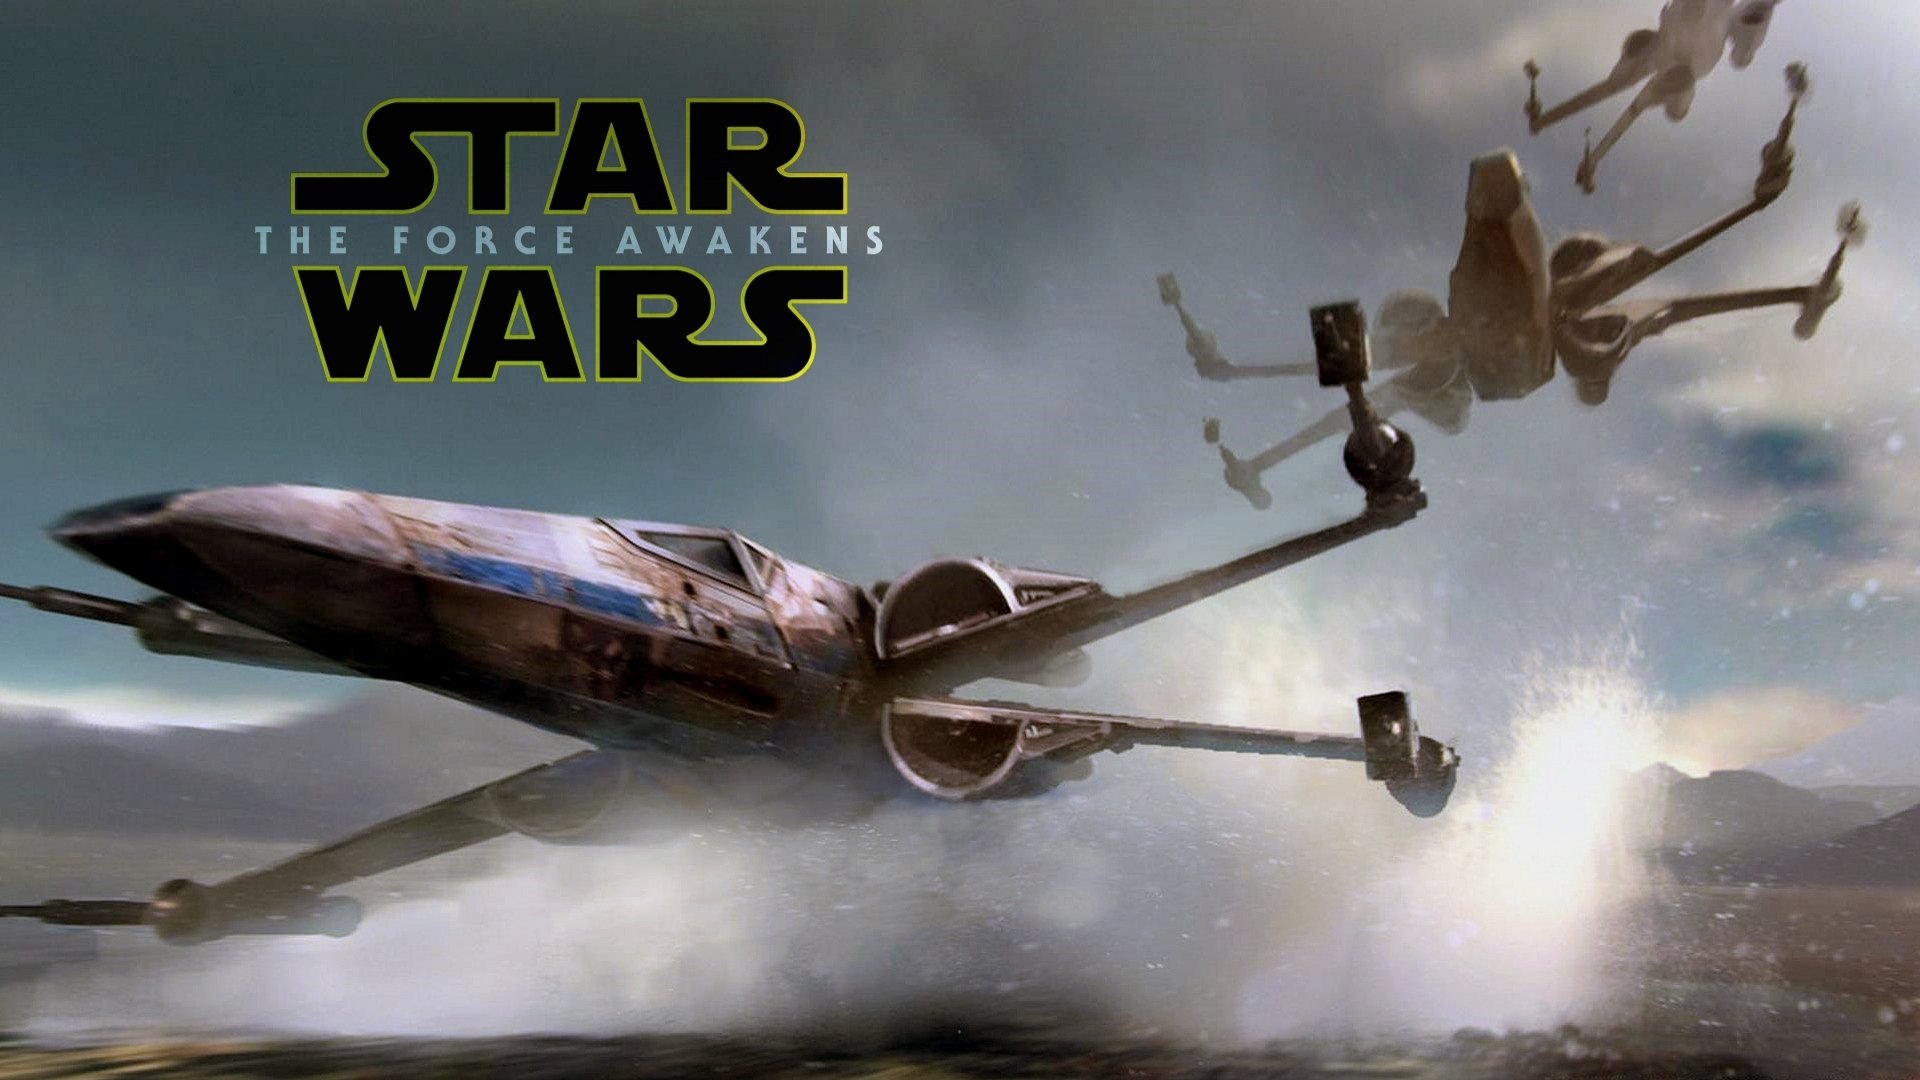 STAR WARS FORCE AWAKENS sci fi action adventure spaceship wallpaper